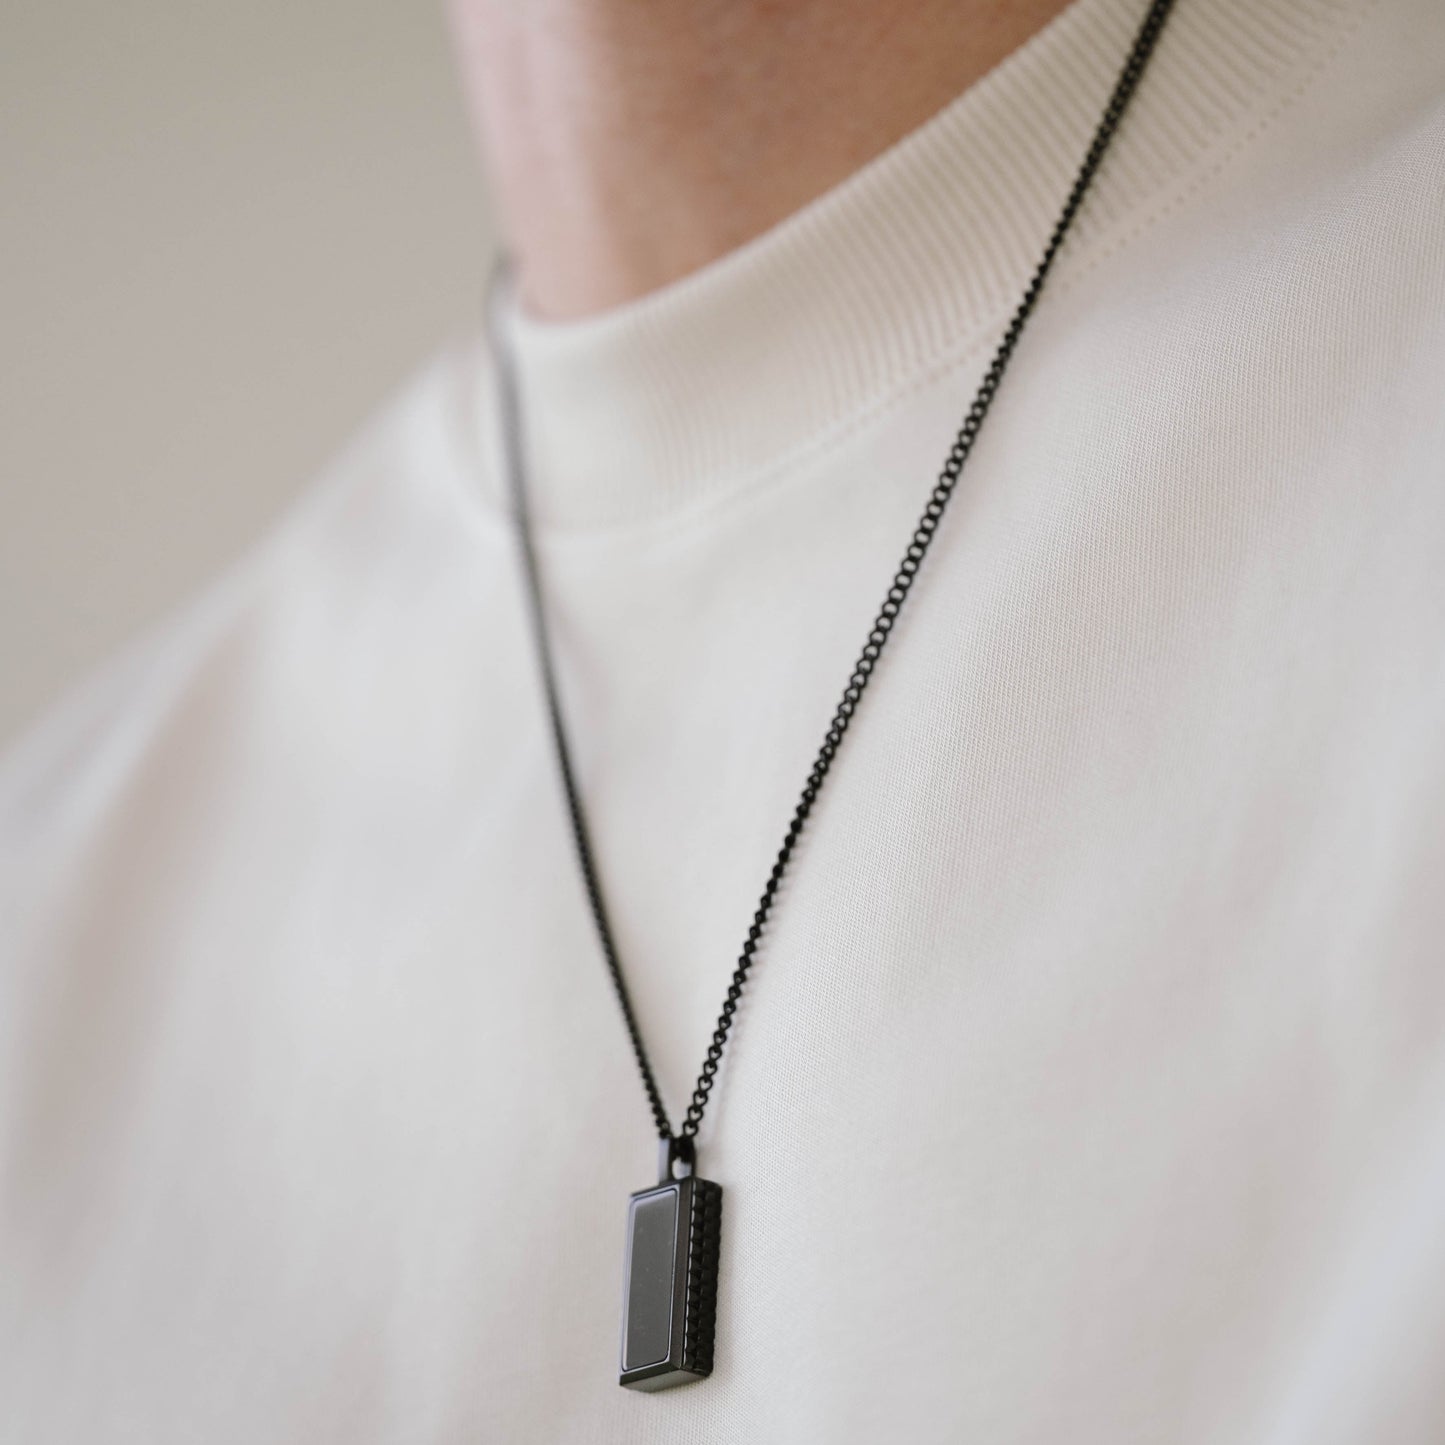 black pendant necklace chain for men Hatton Gemstone Necklace Black/Black Onyx Adjustable 60-70cm/24-28' steel and barnett